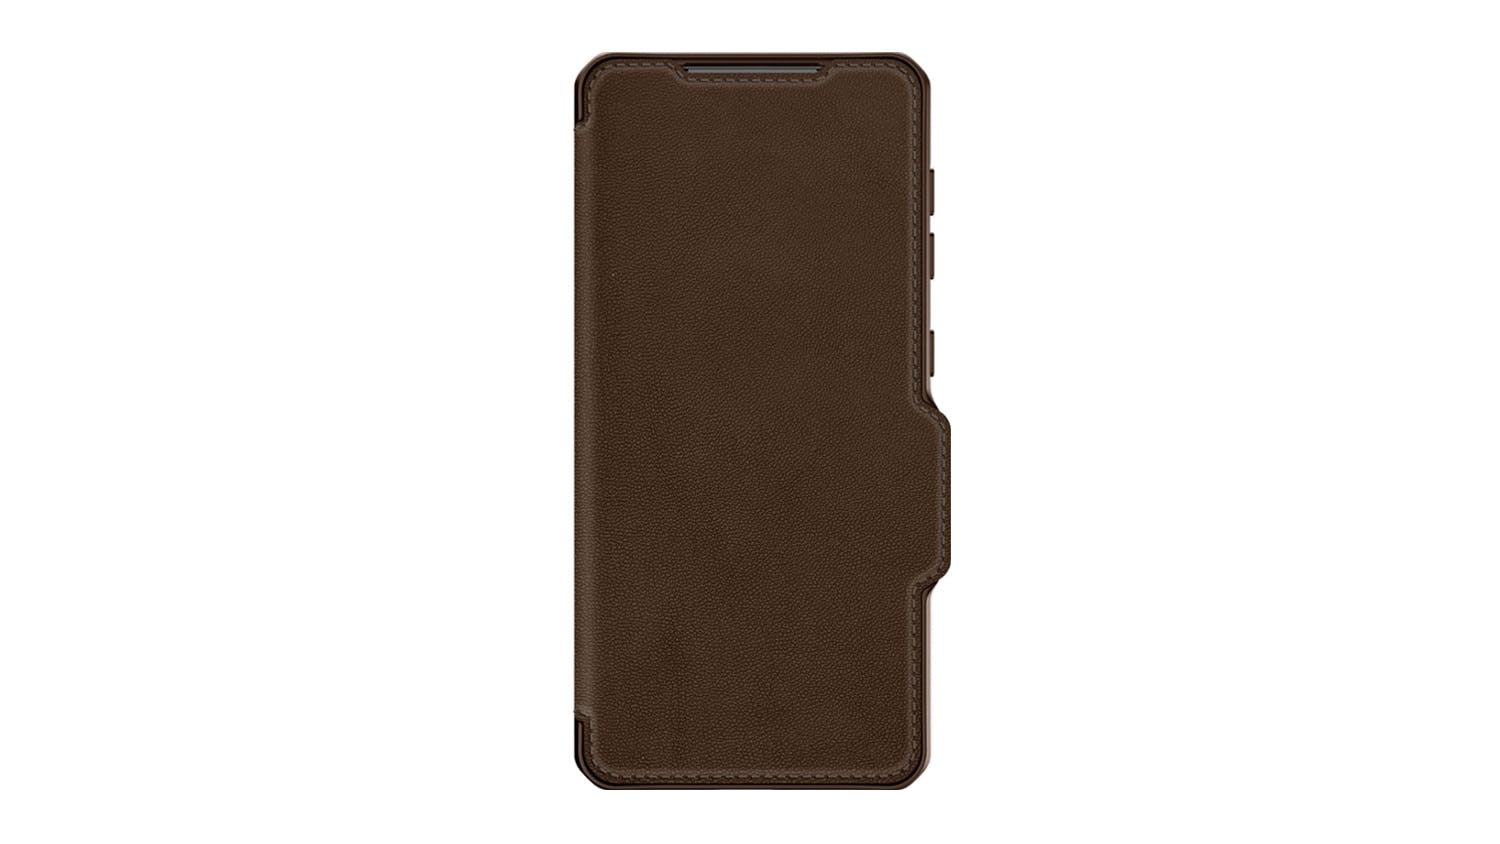 ITSKINS Hybrid Folio Leather Case for Samsung Galaxy S21 Ultra - Brown